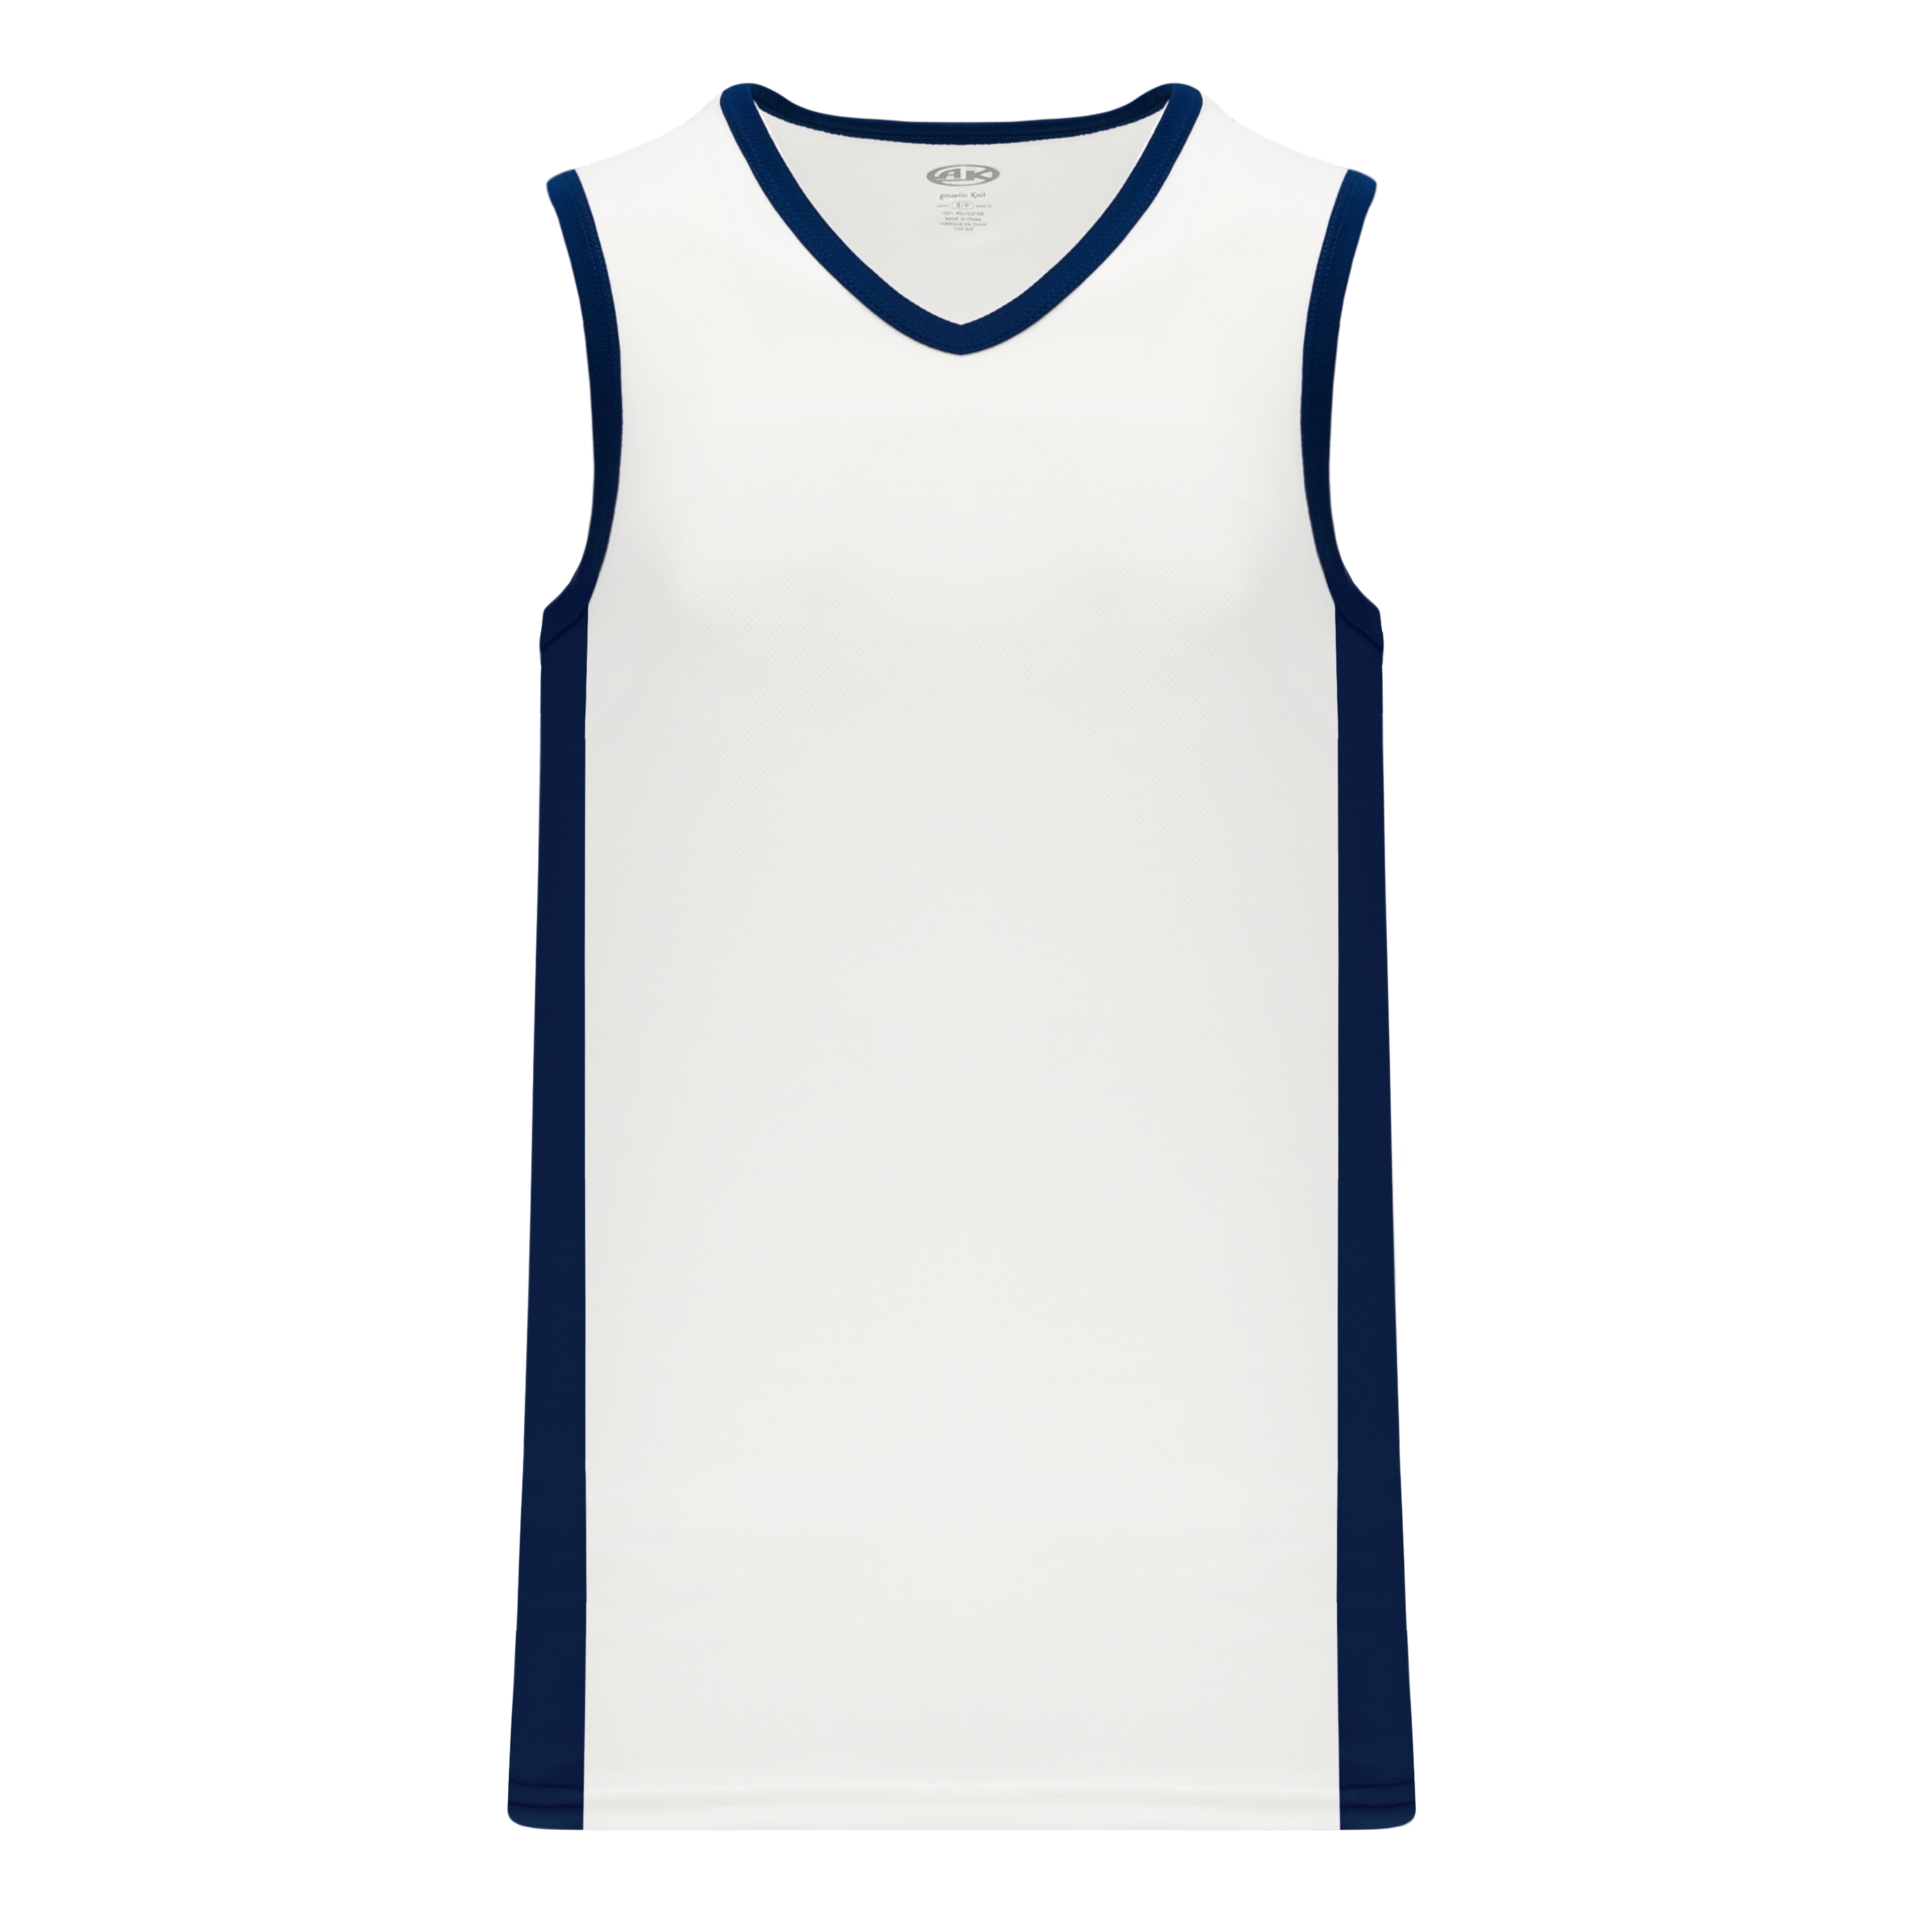 Dry-Flex Pro Style Basketball Jersey-Pro Blue/Black/White